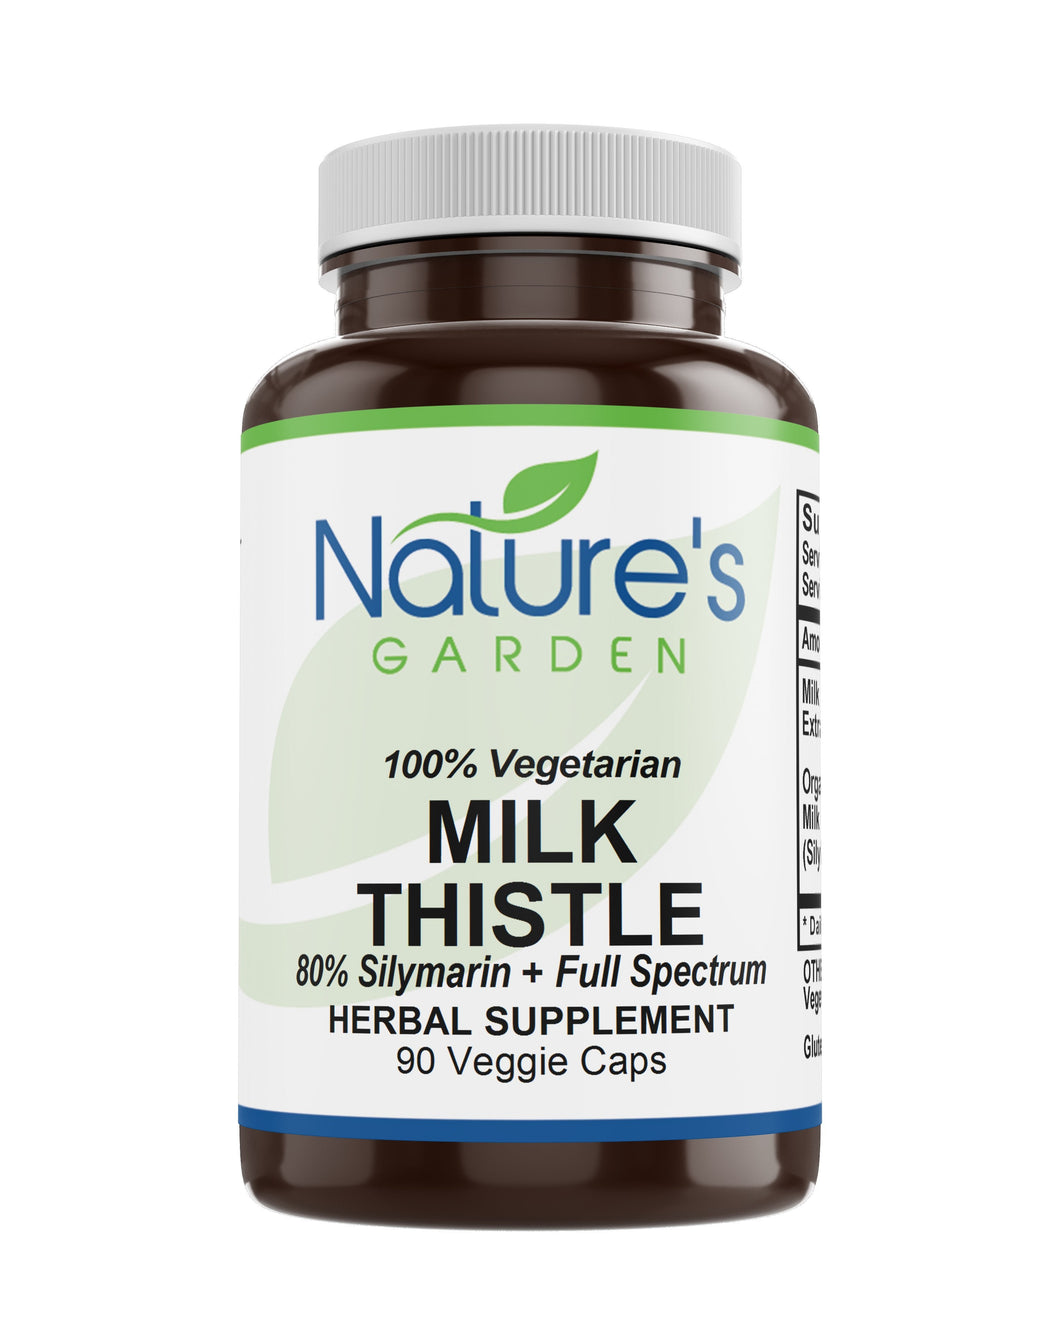 Milk Thistle - 90 Veggie Caps with Organic Milk Thistles and Potent Silymarin Extract